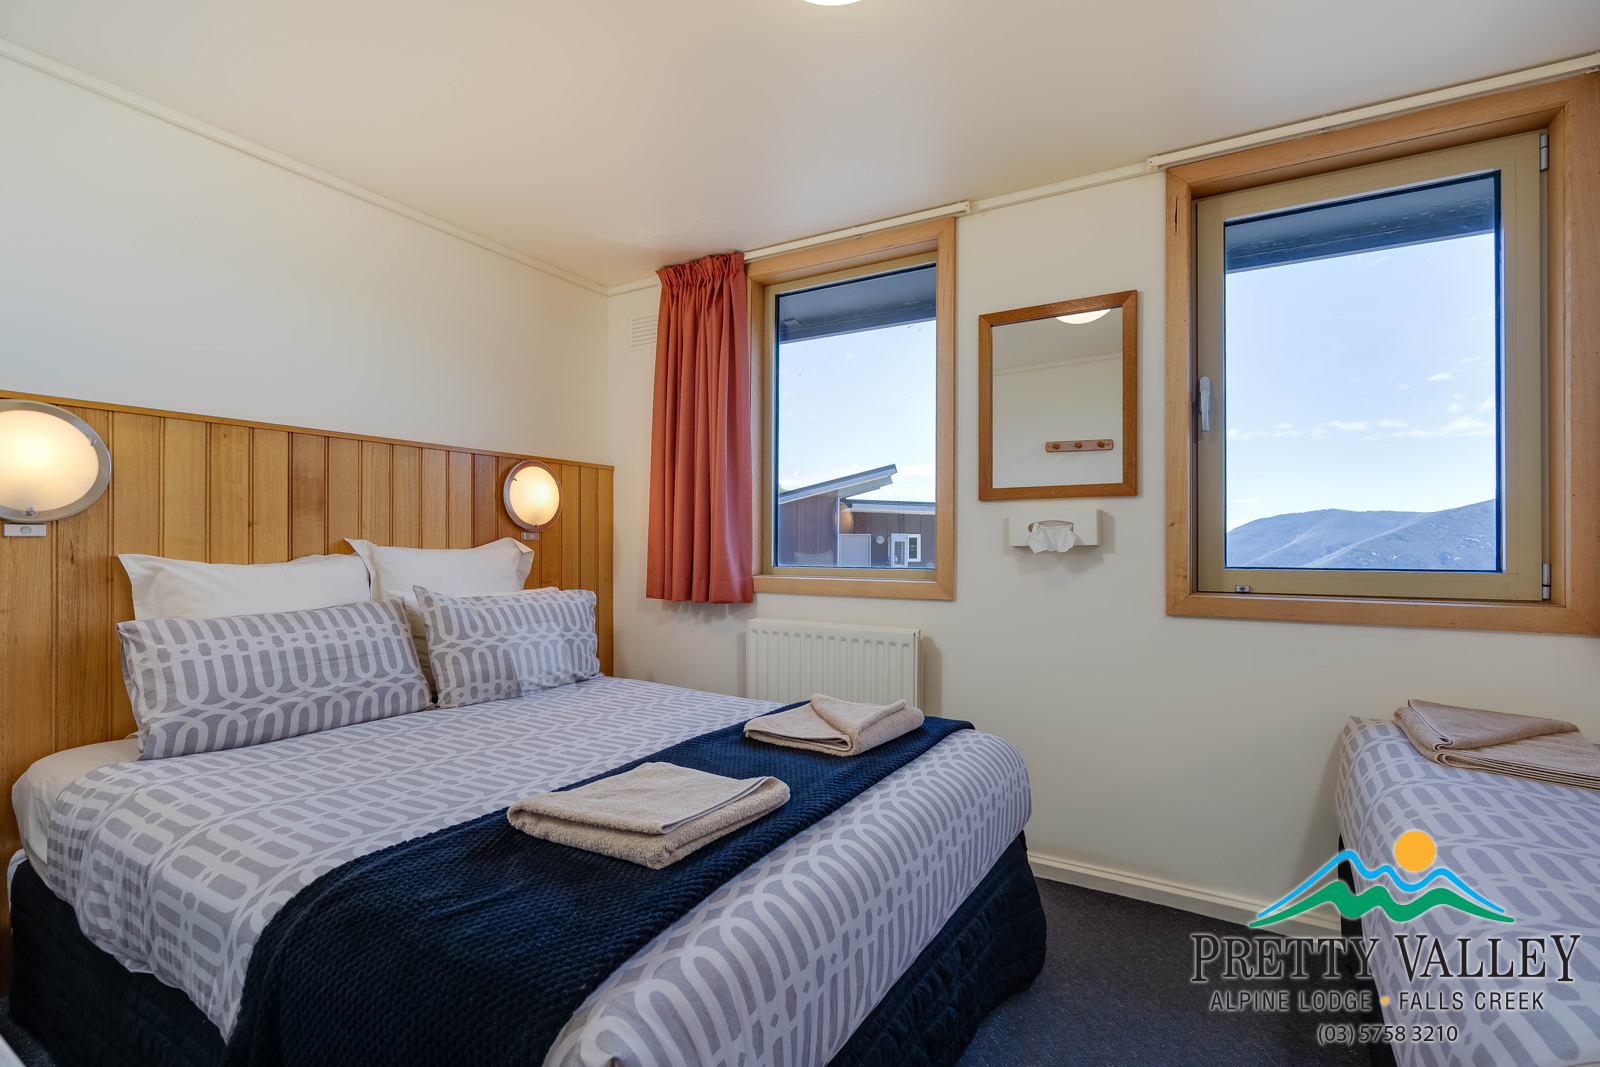 Pretty Valley Alpine Lodge Room 12